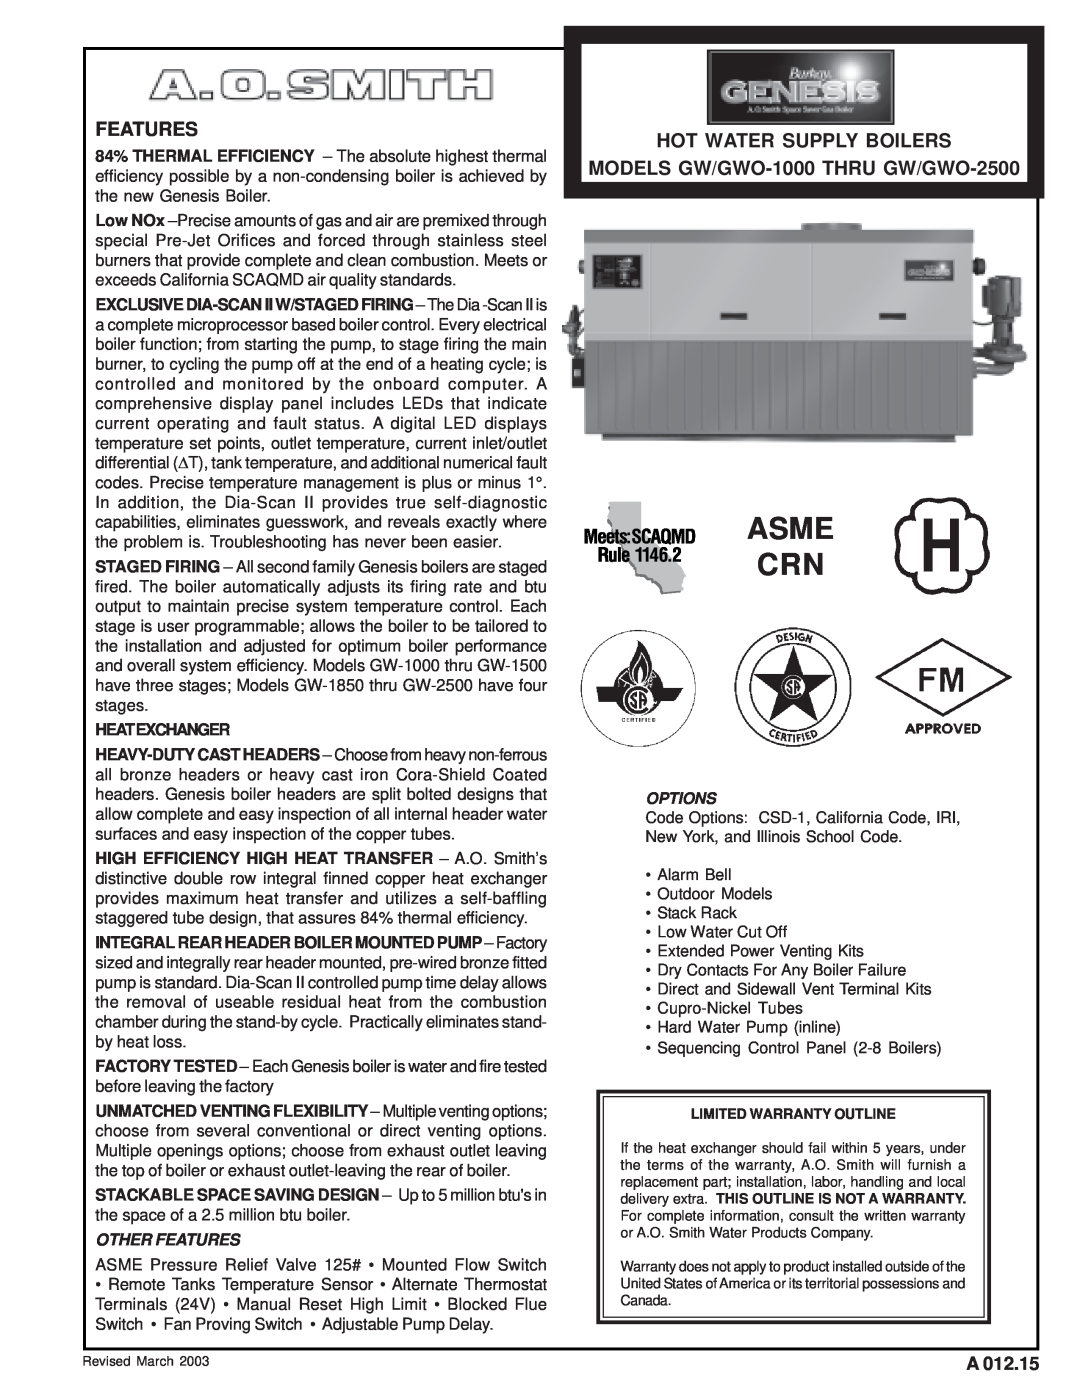 A.O. Smith warranty HOT WATER SUPPLY BOILERS MODELS GW/GWO-1000 THRU GW/GWO-2500, Asme Crn, Other Features, Options 